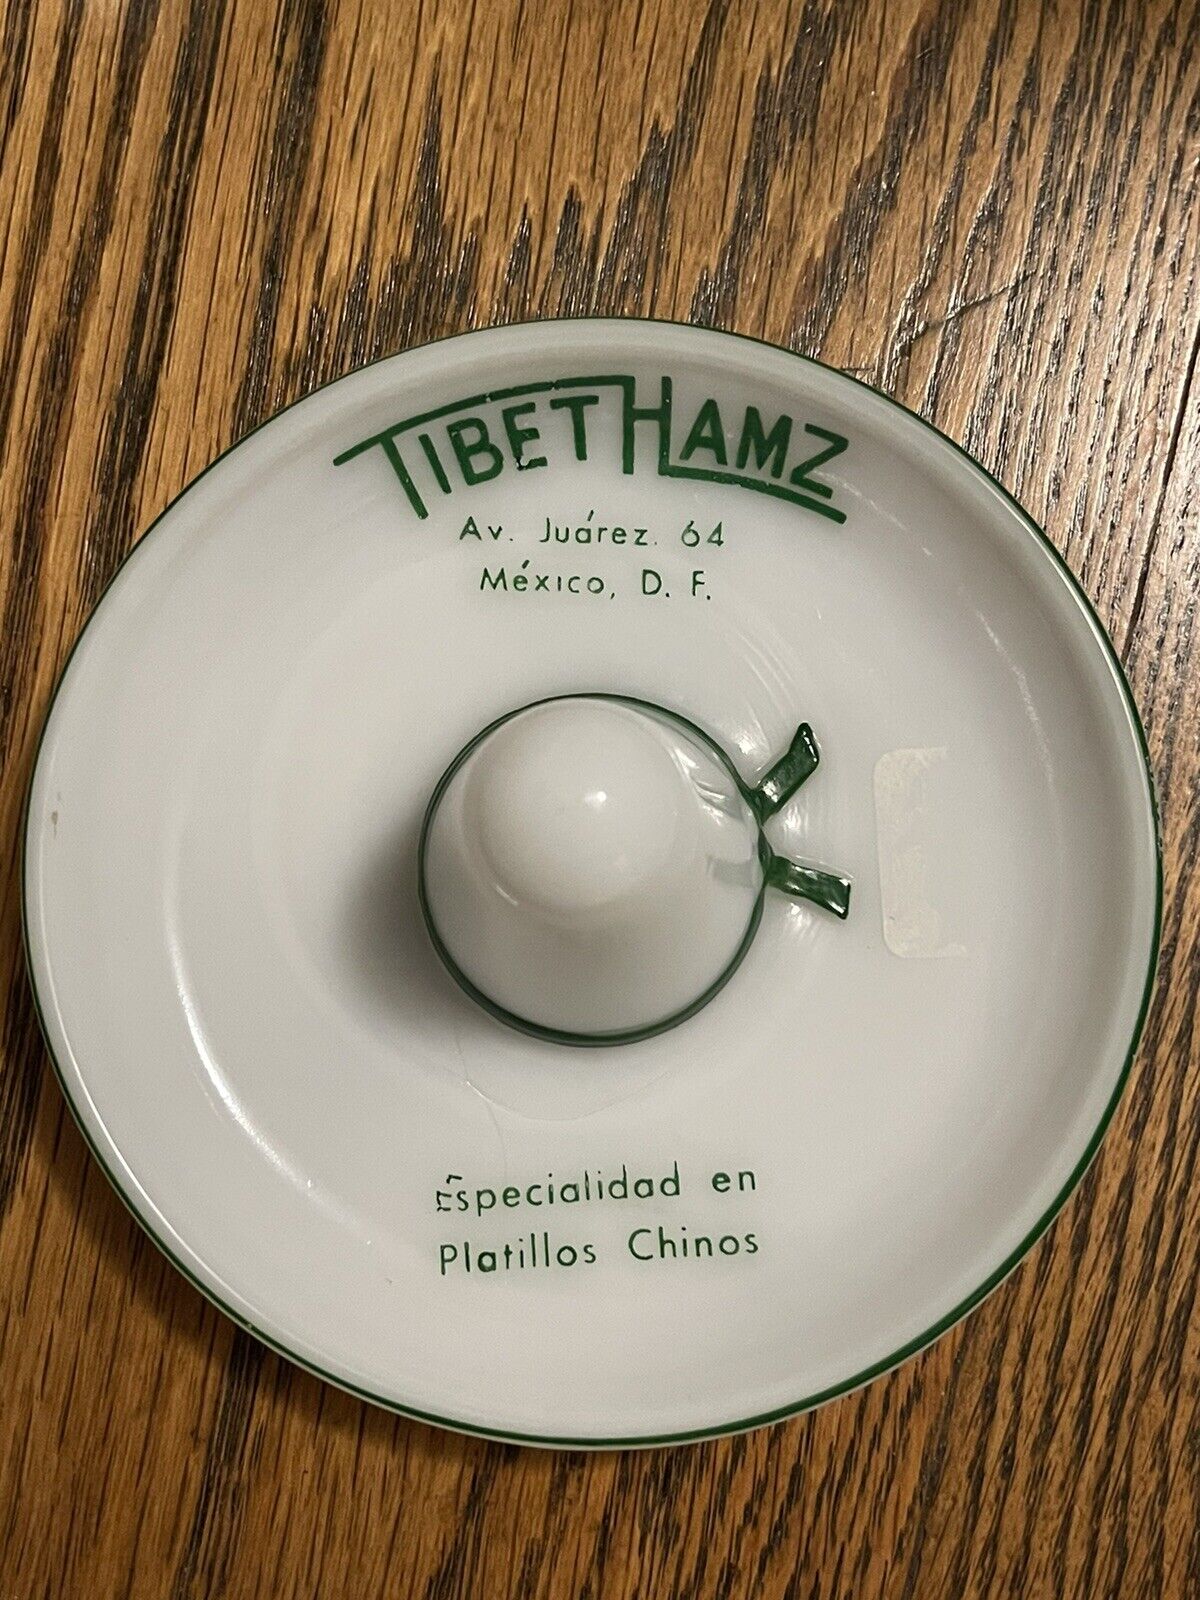 Vintage Milk glass Ashtray Sombrero Tibet Hamz Mexico Restaurant